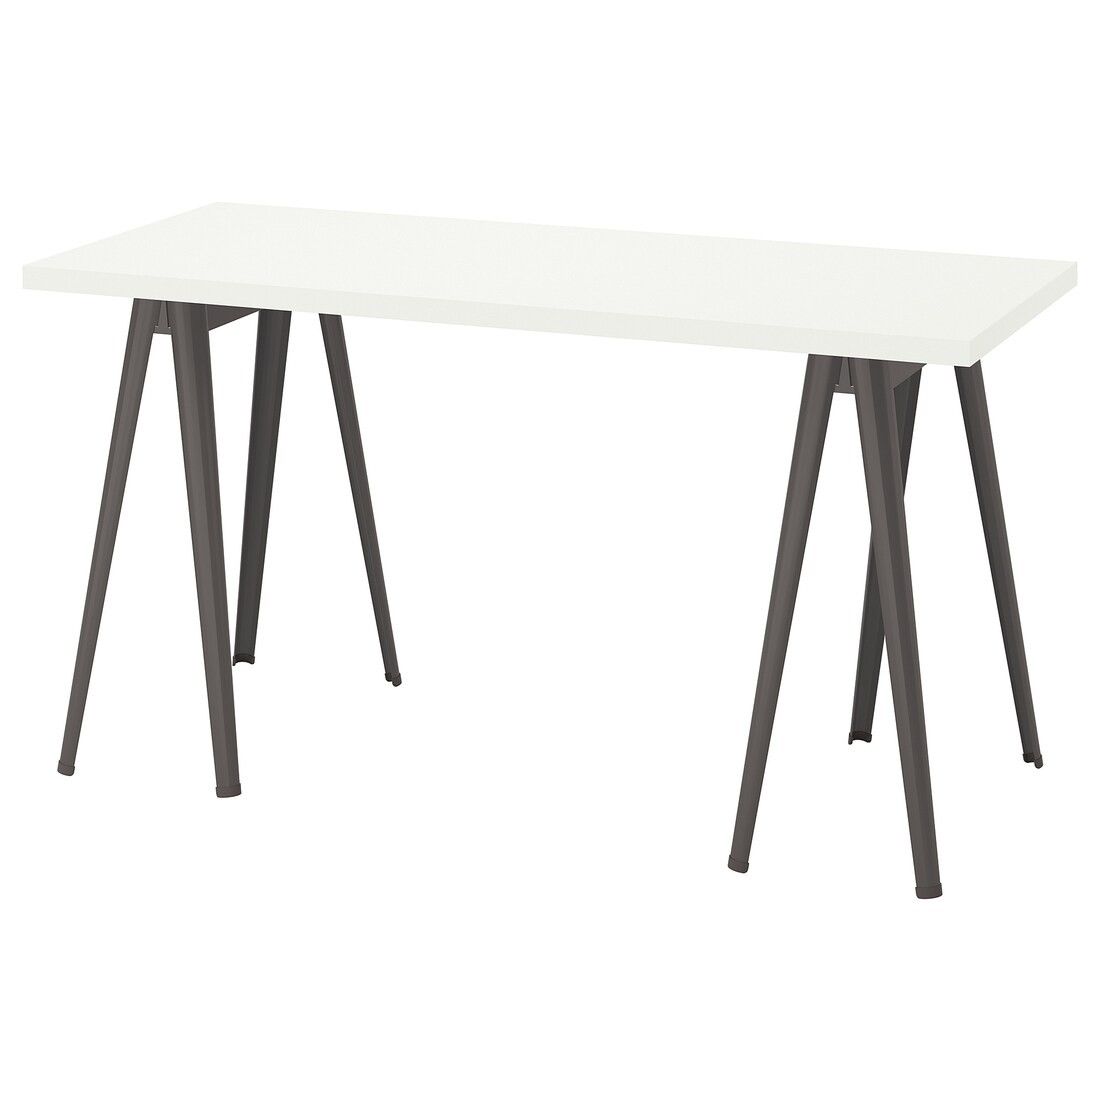 IKEA LAGKAPTEN ЛАГКАПТЕН / NÄRSPEL НЭРСПЕЛЬ Письменный стол, белый / темно-серый, 140x60 см 79417190 | 794.171.90